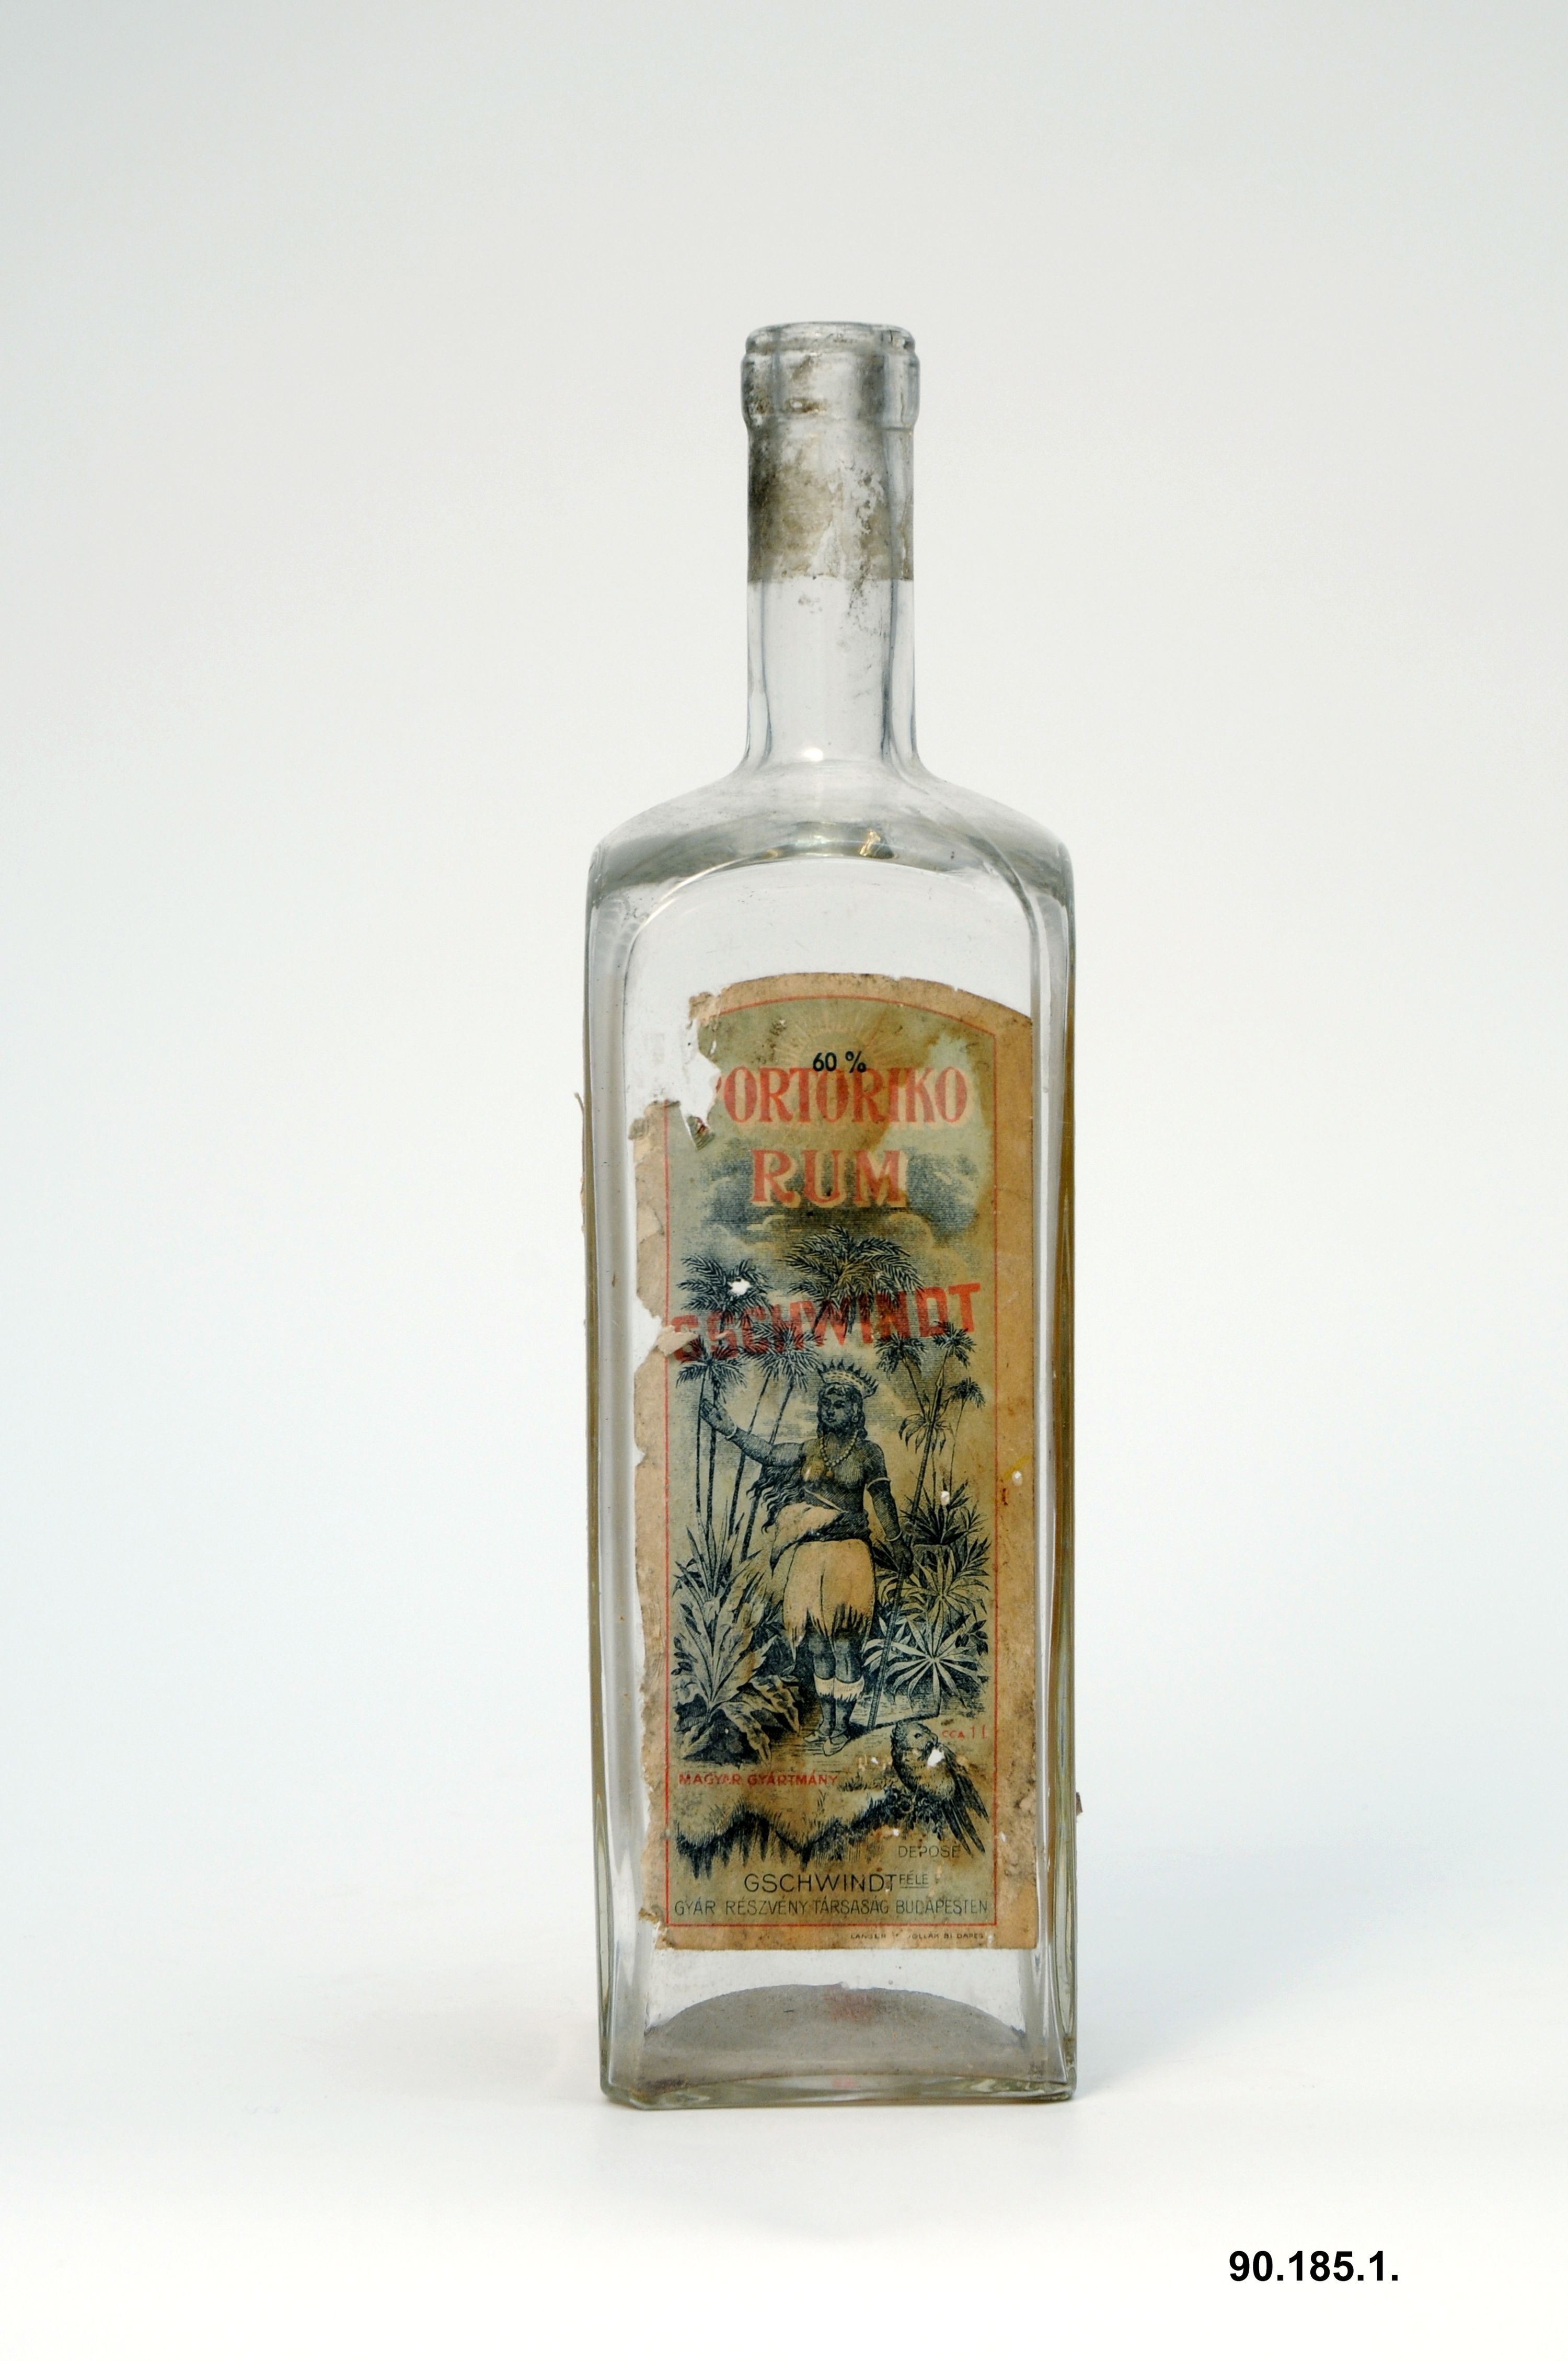 Rumosüveg, Portoriko rum, Gschwindt (Óbudai Múzeum CC BY-NC-SA)